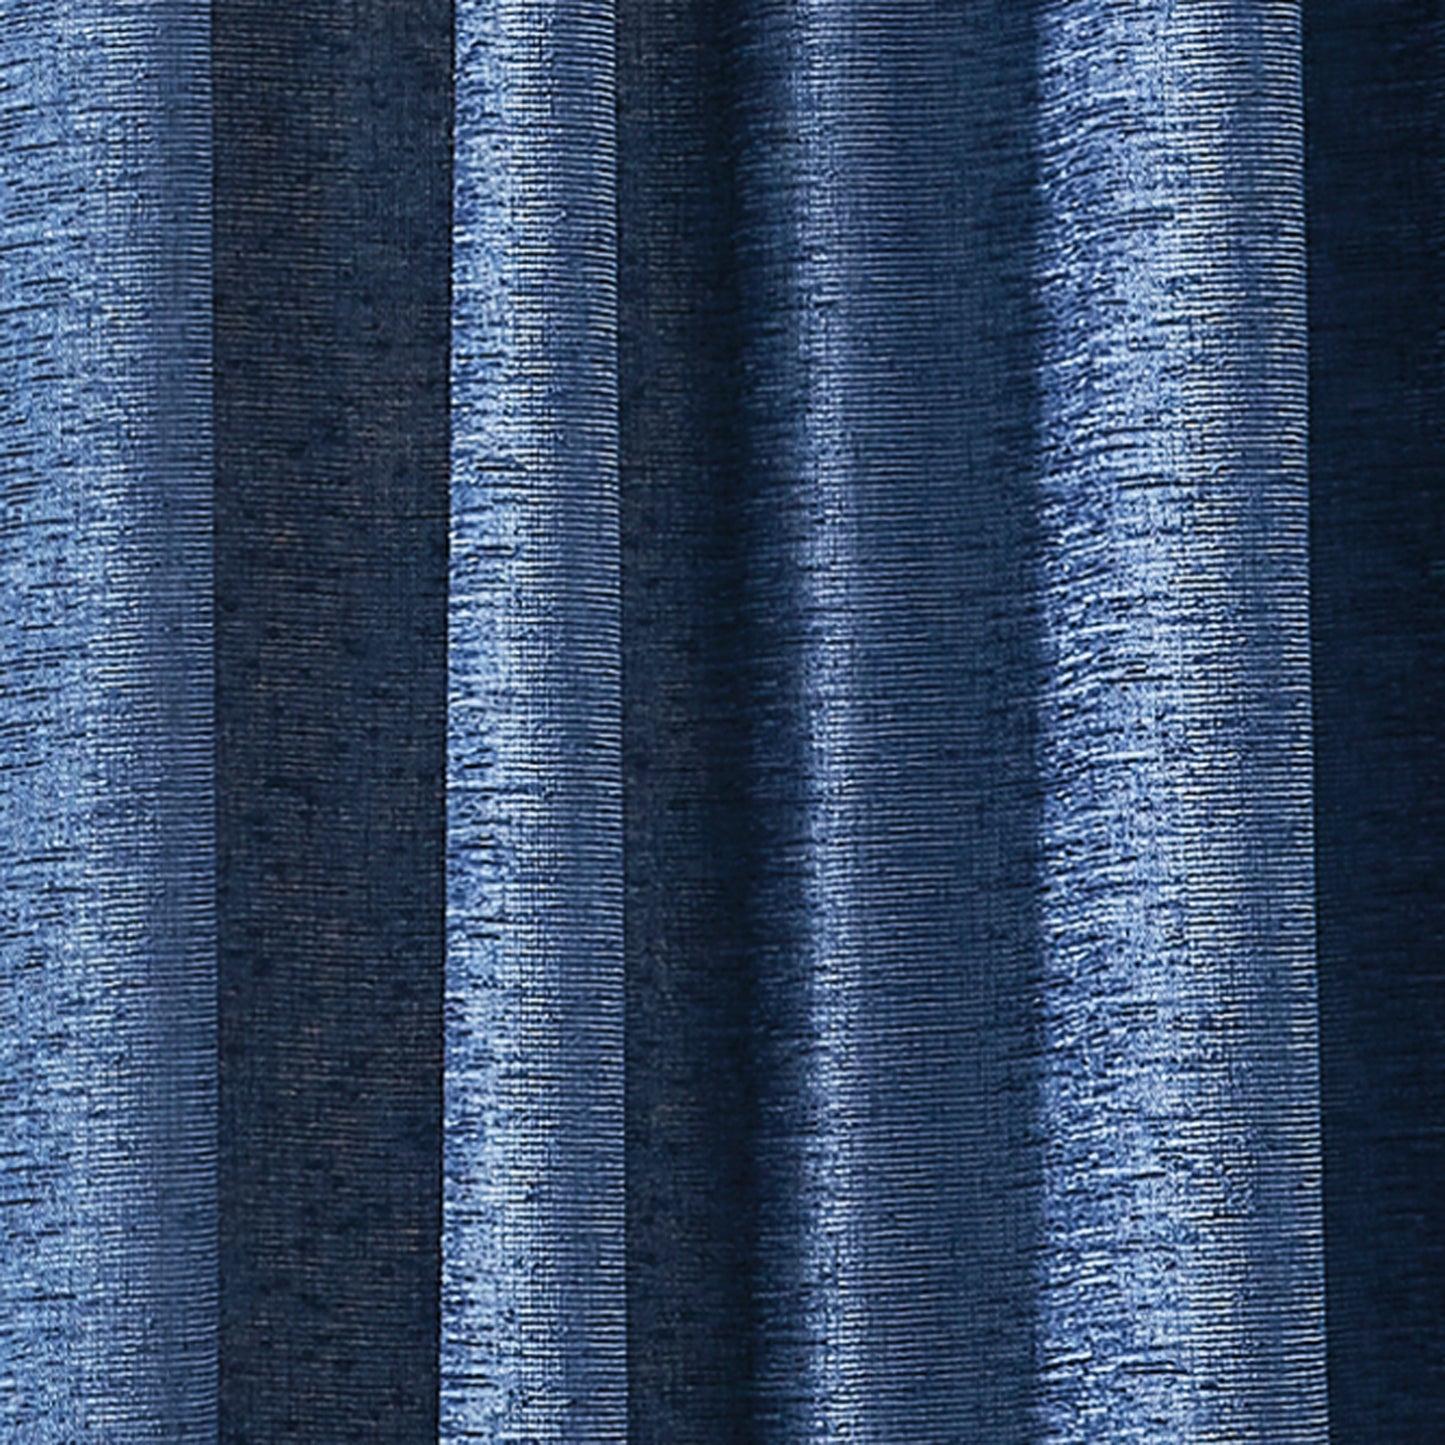 DKNY Boucle Chenille Curtain Panel Pair